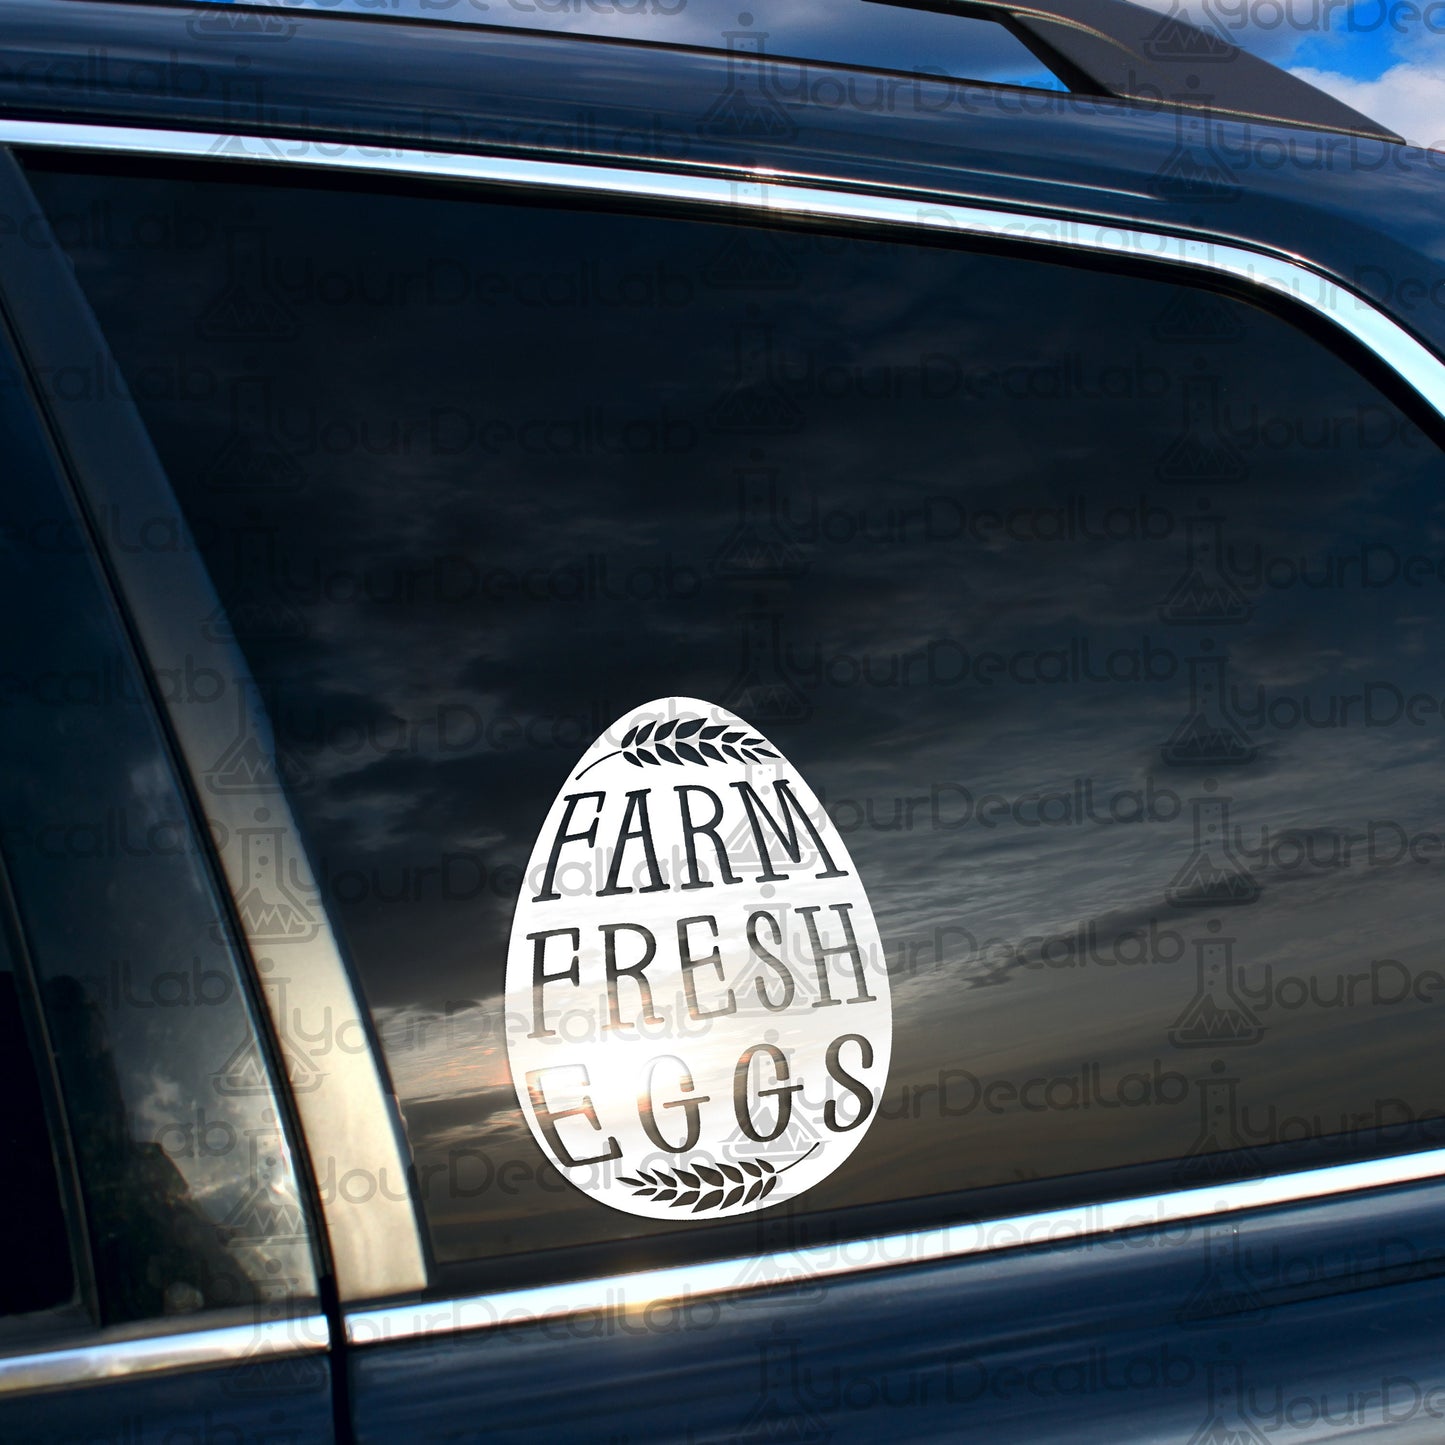 a sticker on the side of a car that says farm fresh eggs